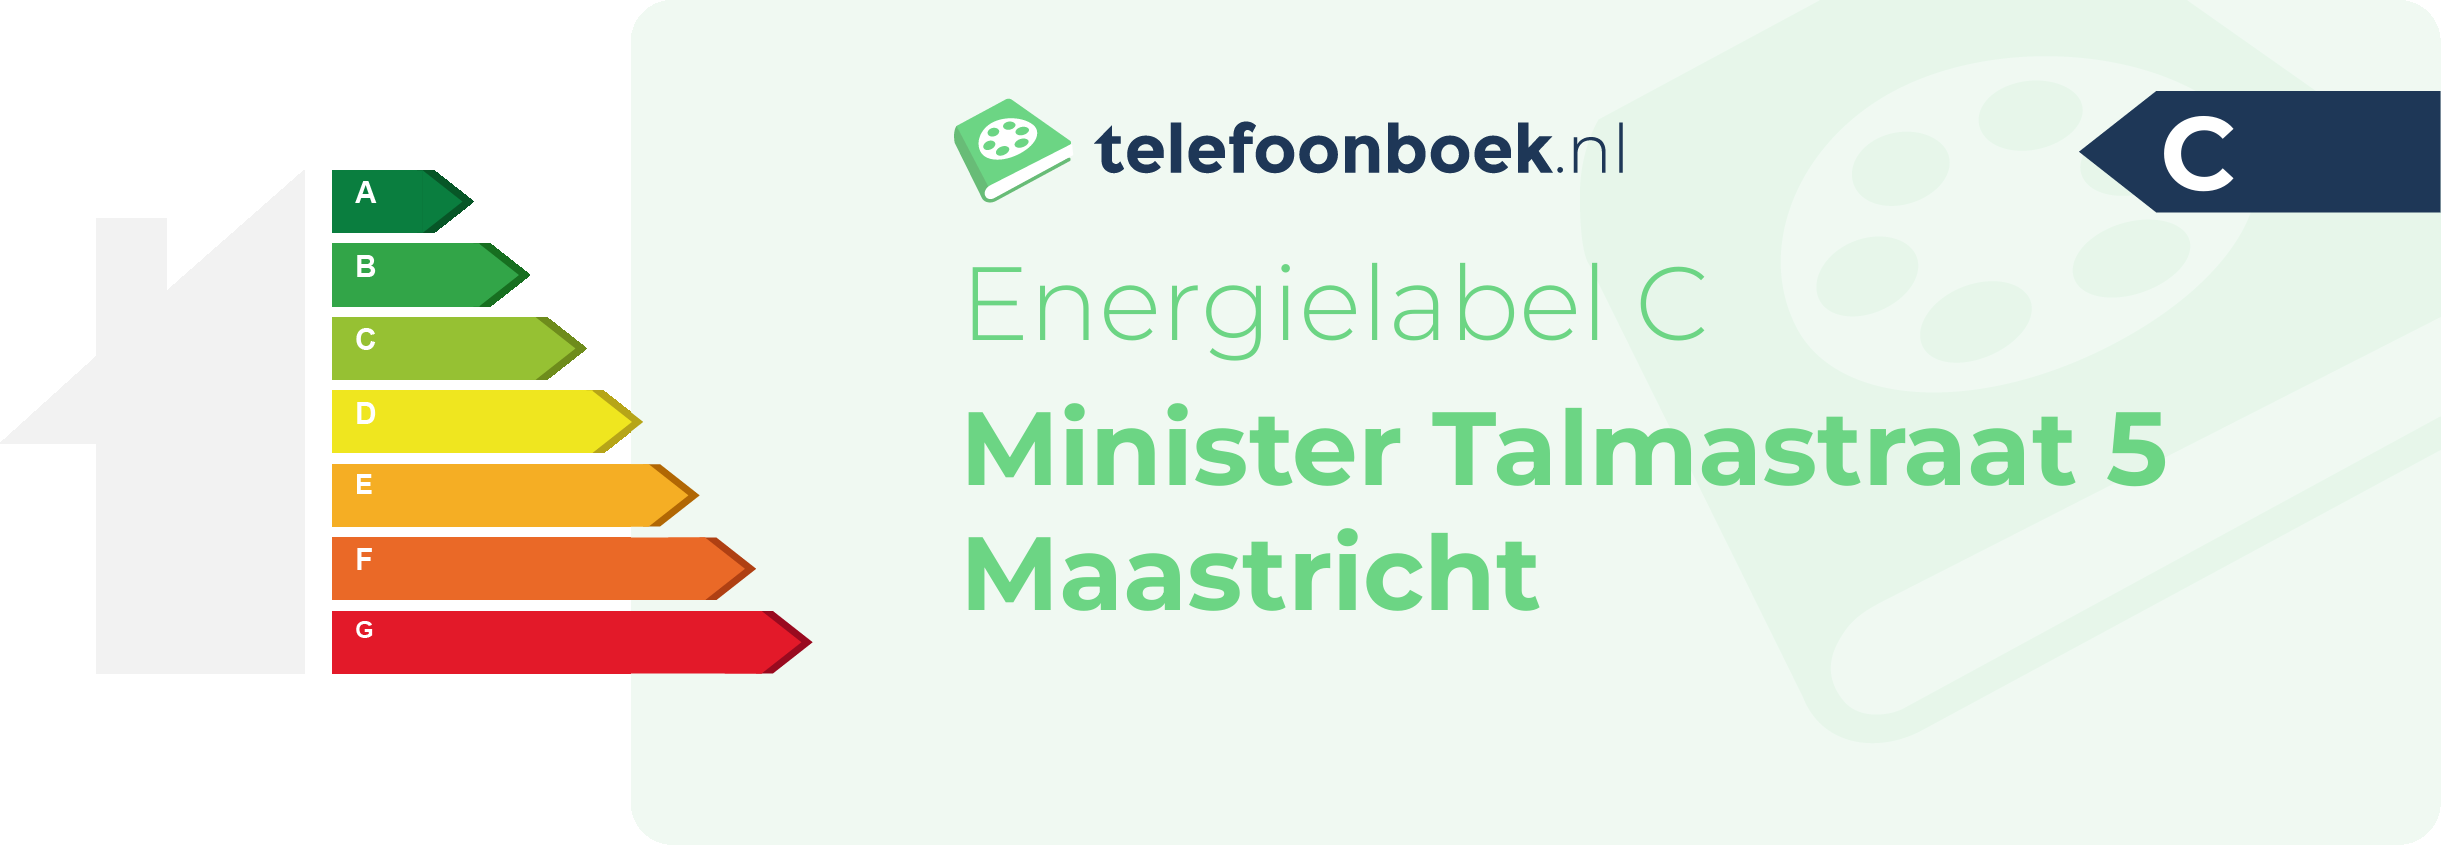 Energielabel Minister Talmastraat 5 Maastricht